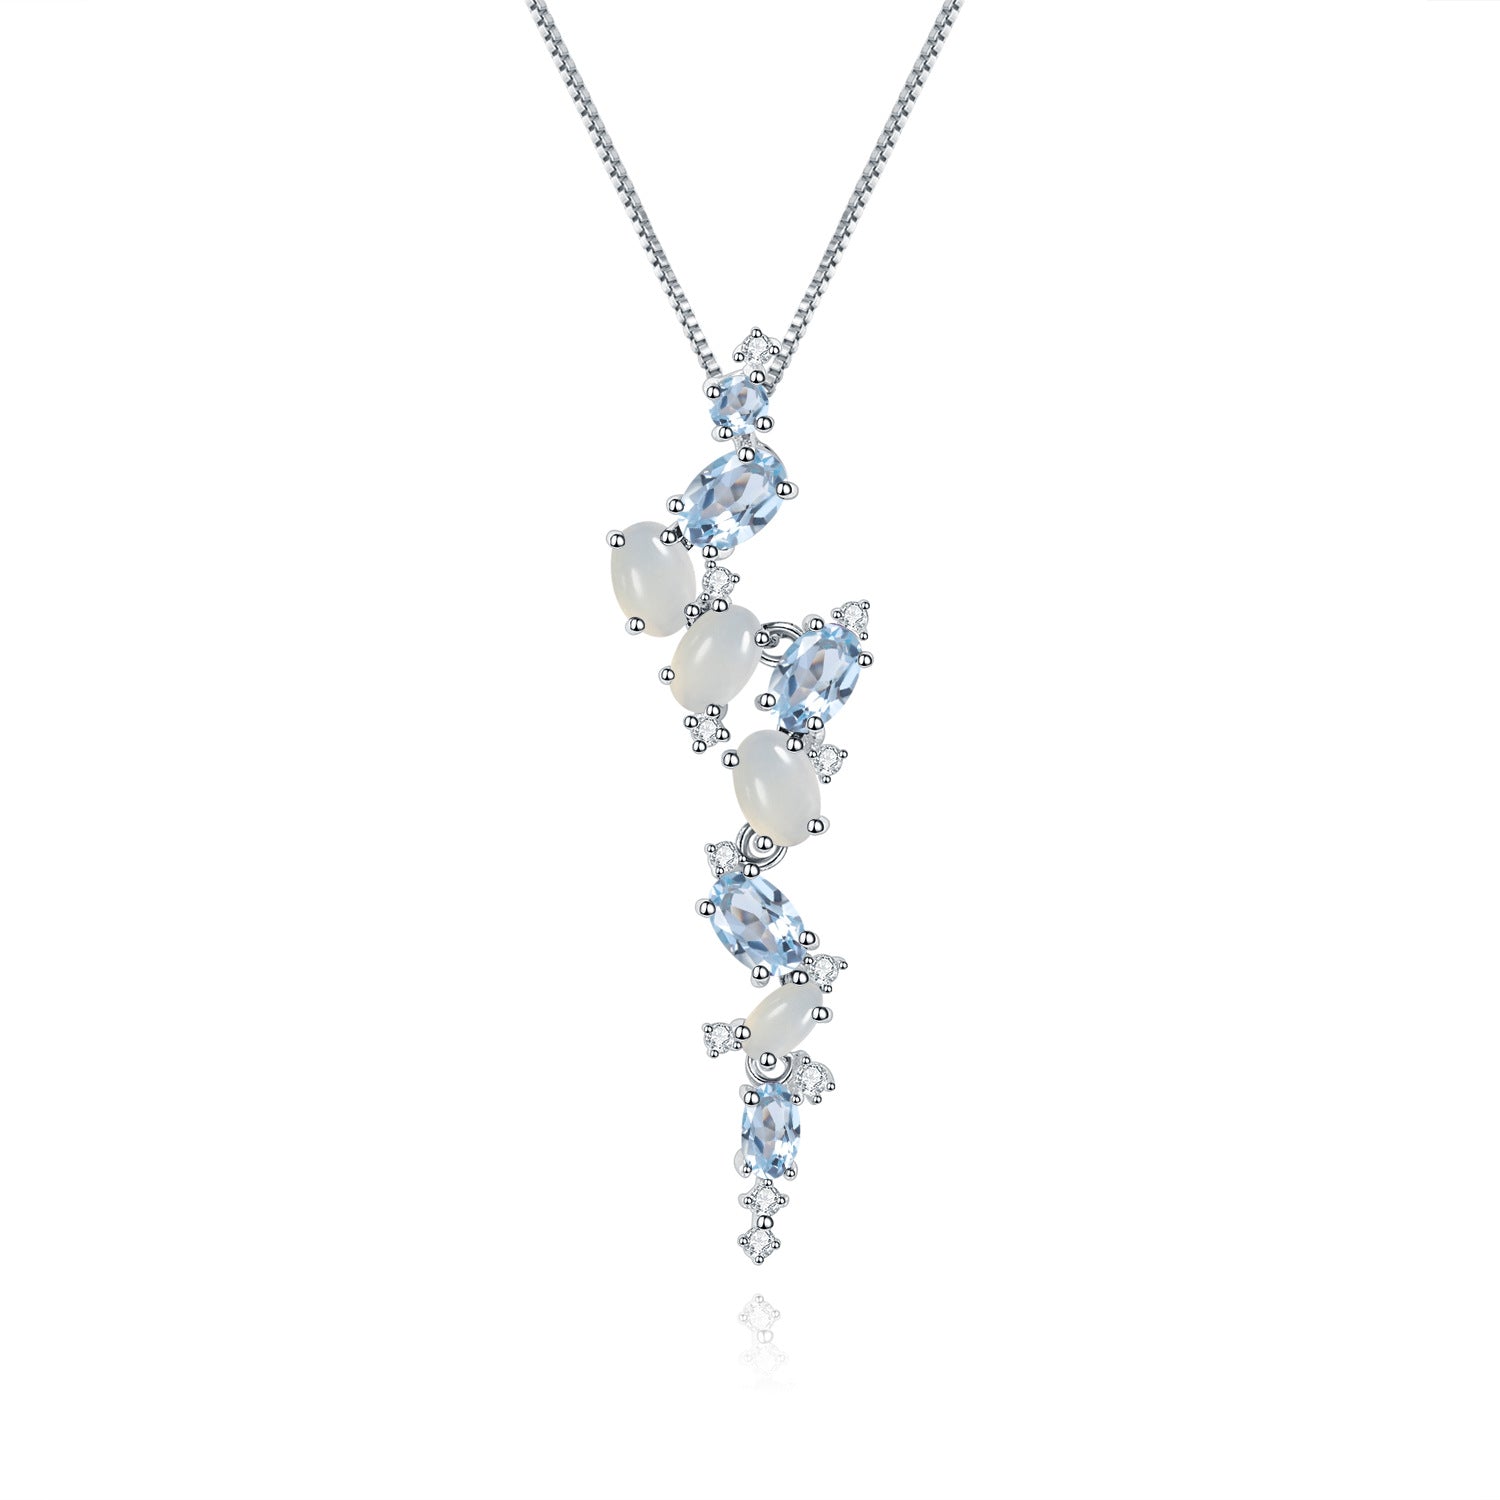 French Romantic Design Premium Natural Colourful Gemstone Pendulous Pendant Silver Necklace for Women